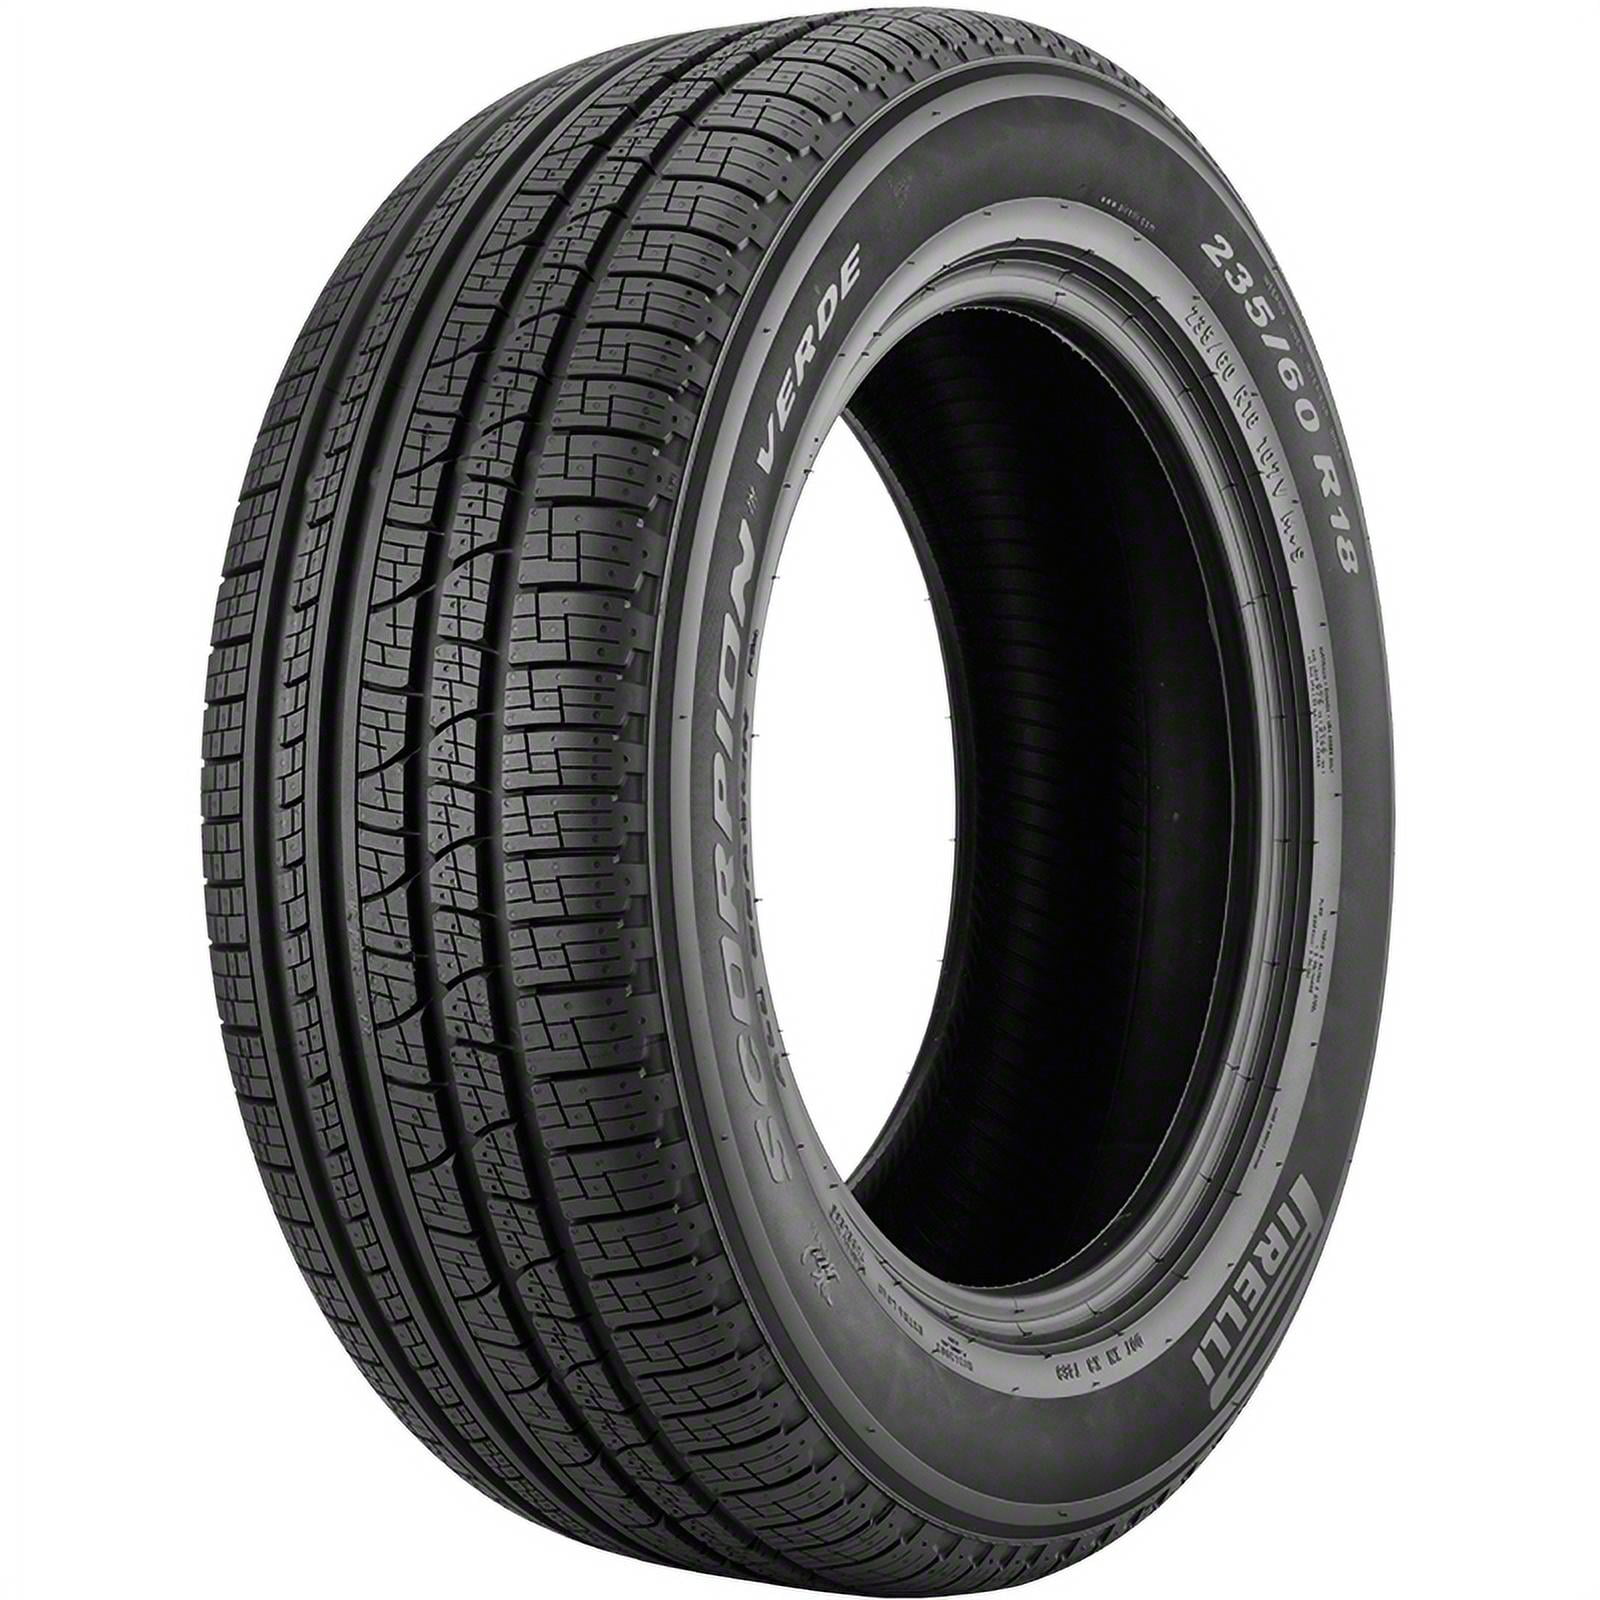 Pirelli Scorpion Verde All Season Plus II High Performance Radial Tire 245/60R18 105H